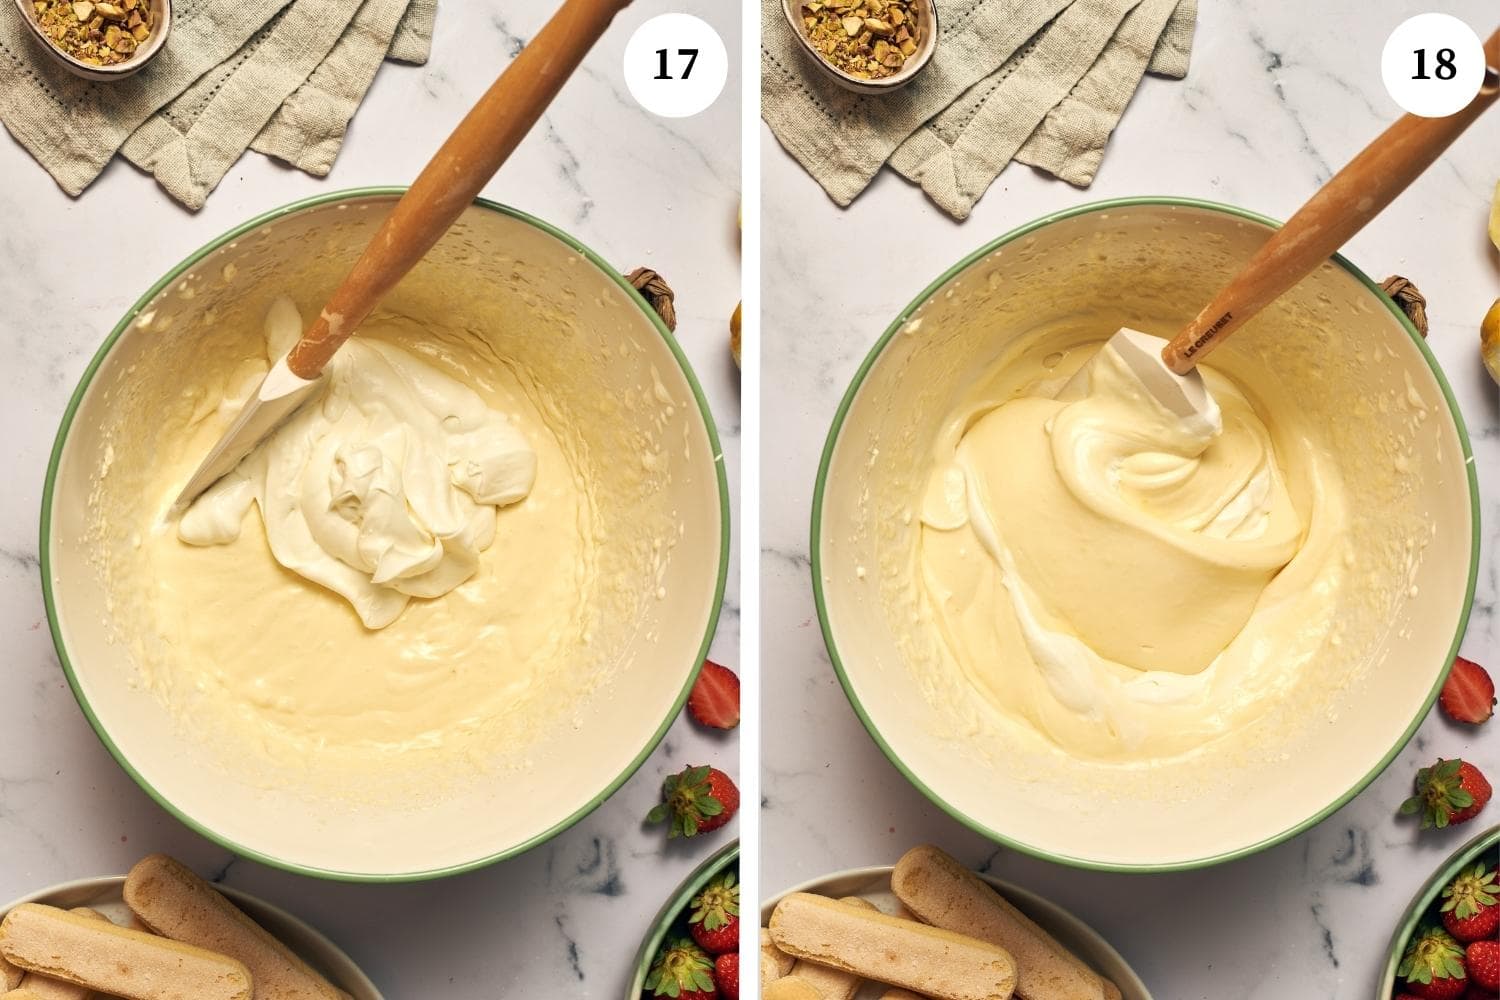 Process for making mascarpone cream for strawberry tiramisu: carefully fold the whipped cream into the mascarpone cream